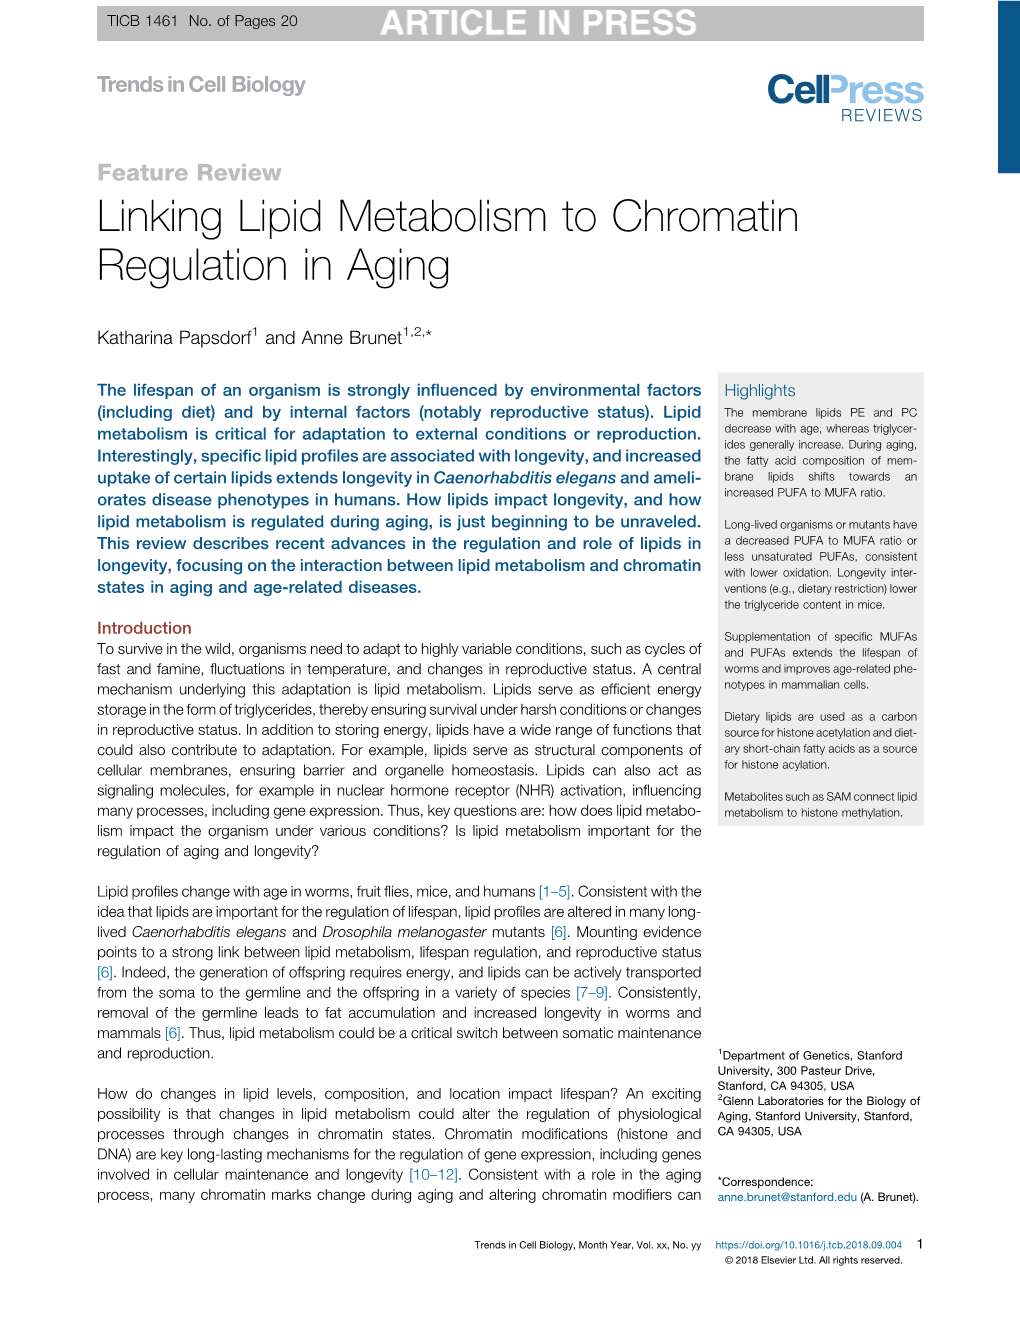 Linking Lipid Metabolism to Chromatin Regulation in Aging